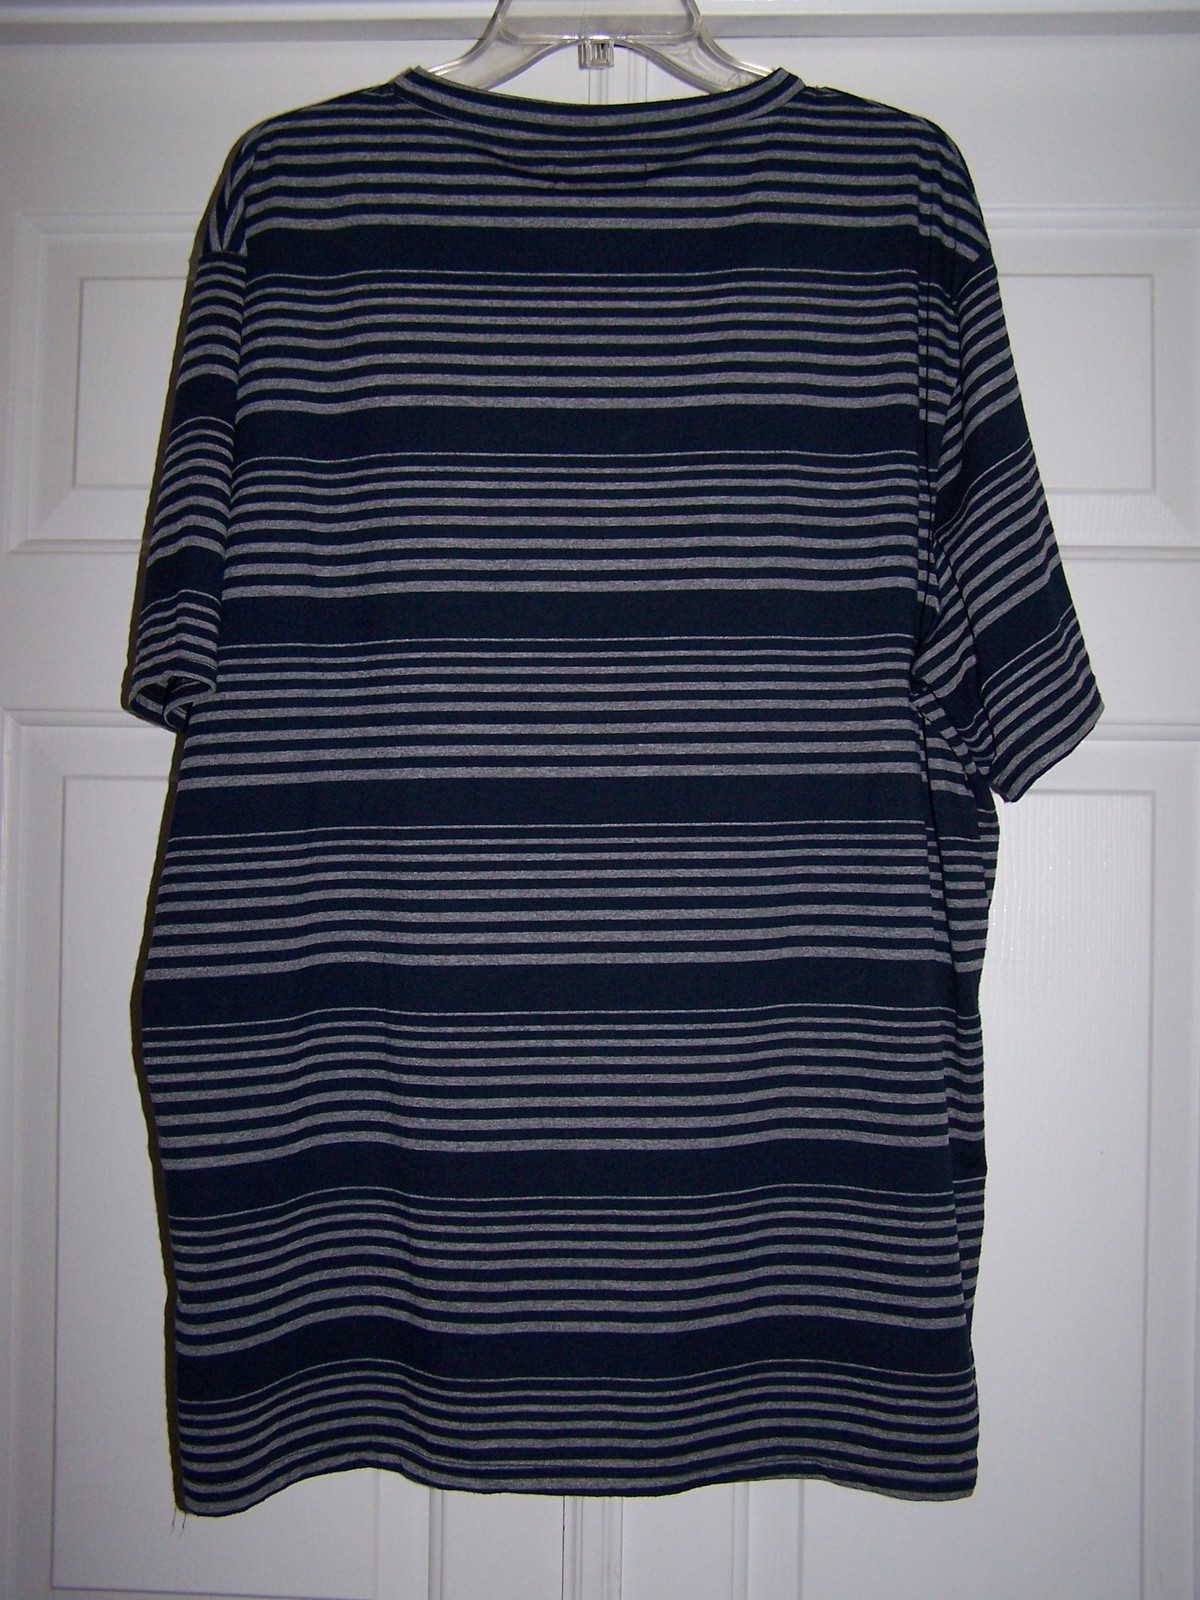 Courage Clothing Co. Men's XXL Shirt Blue/Grey Striped Short Sleeve V ...